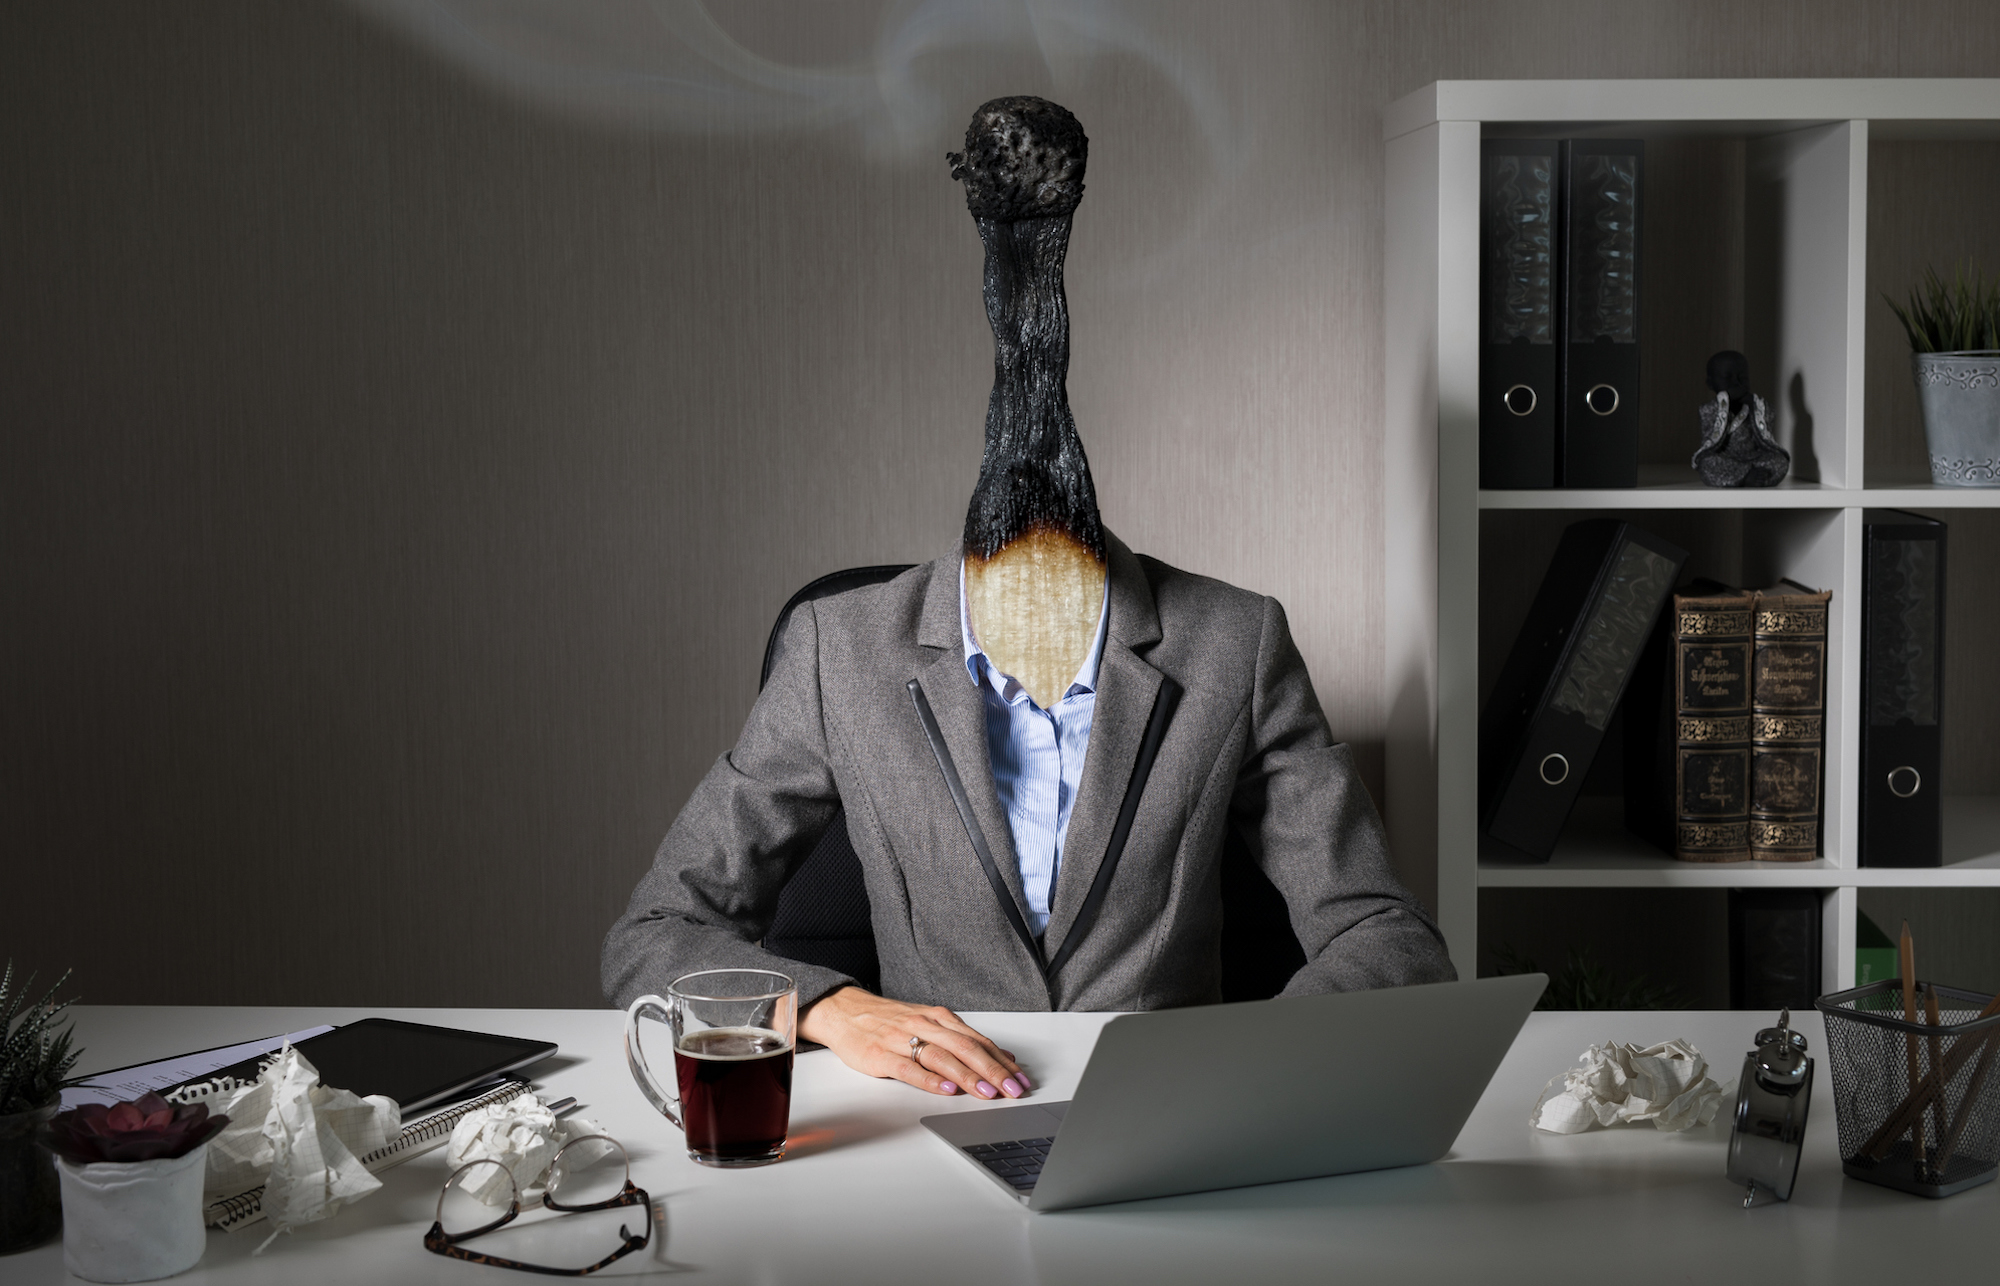 Conceptual photo illustrating burnout at work